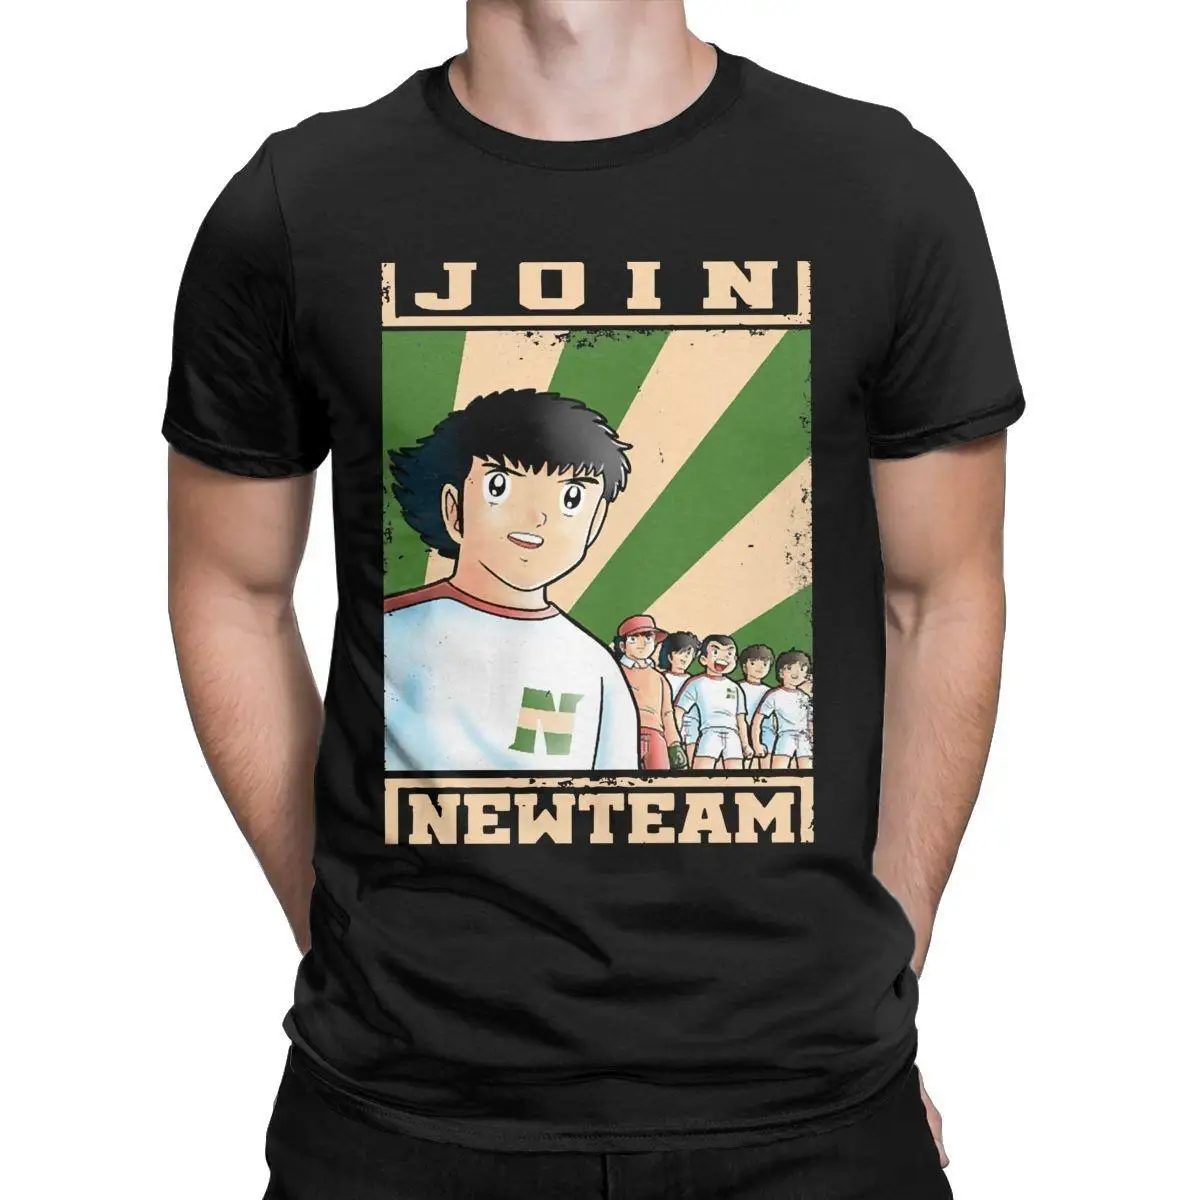 Join Newteam Captain Tsubasa T Shirt Men's 100% Cotton Hipster T-Shirt O Neck Football Tee Shirt Short Sleeve Clothes Gift Idea